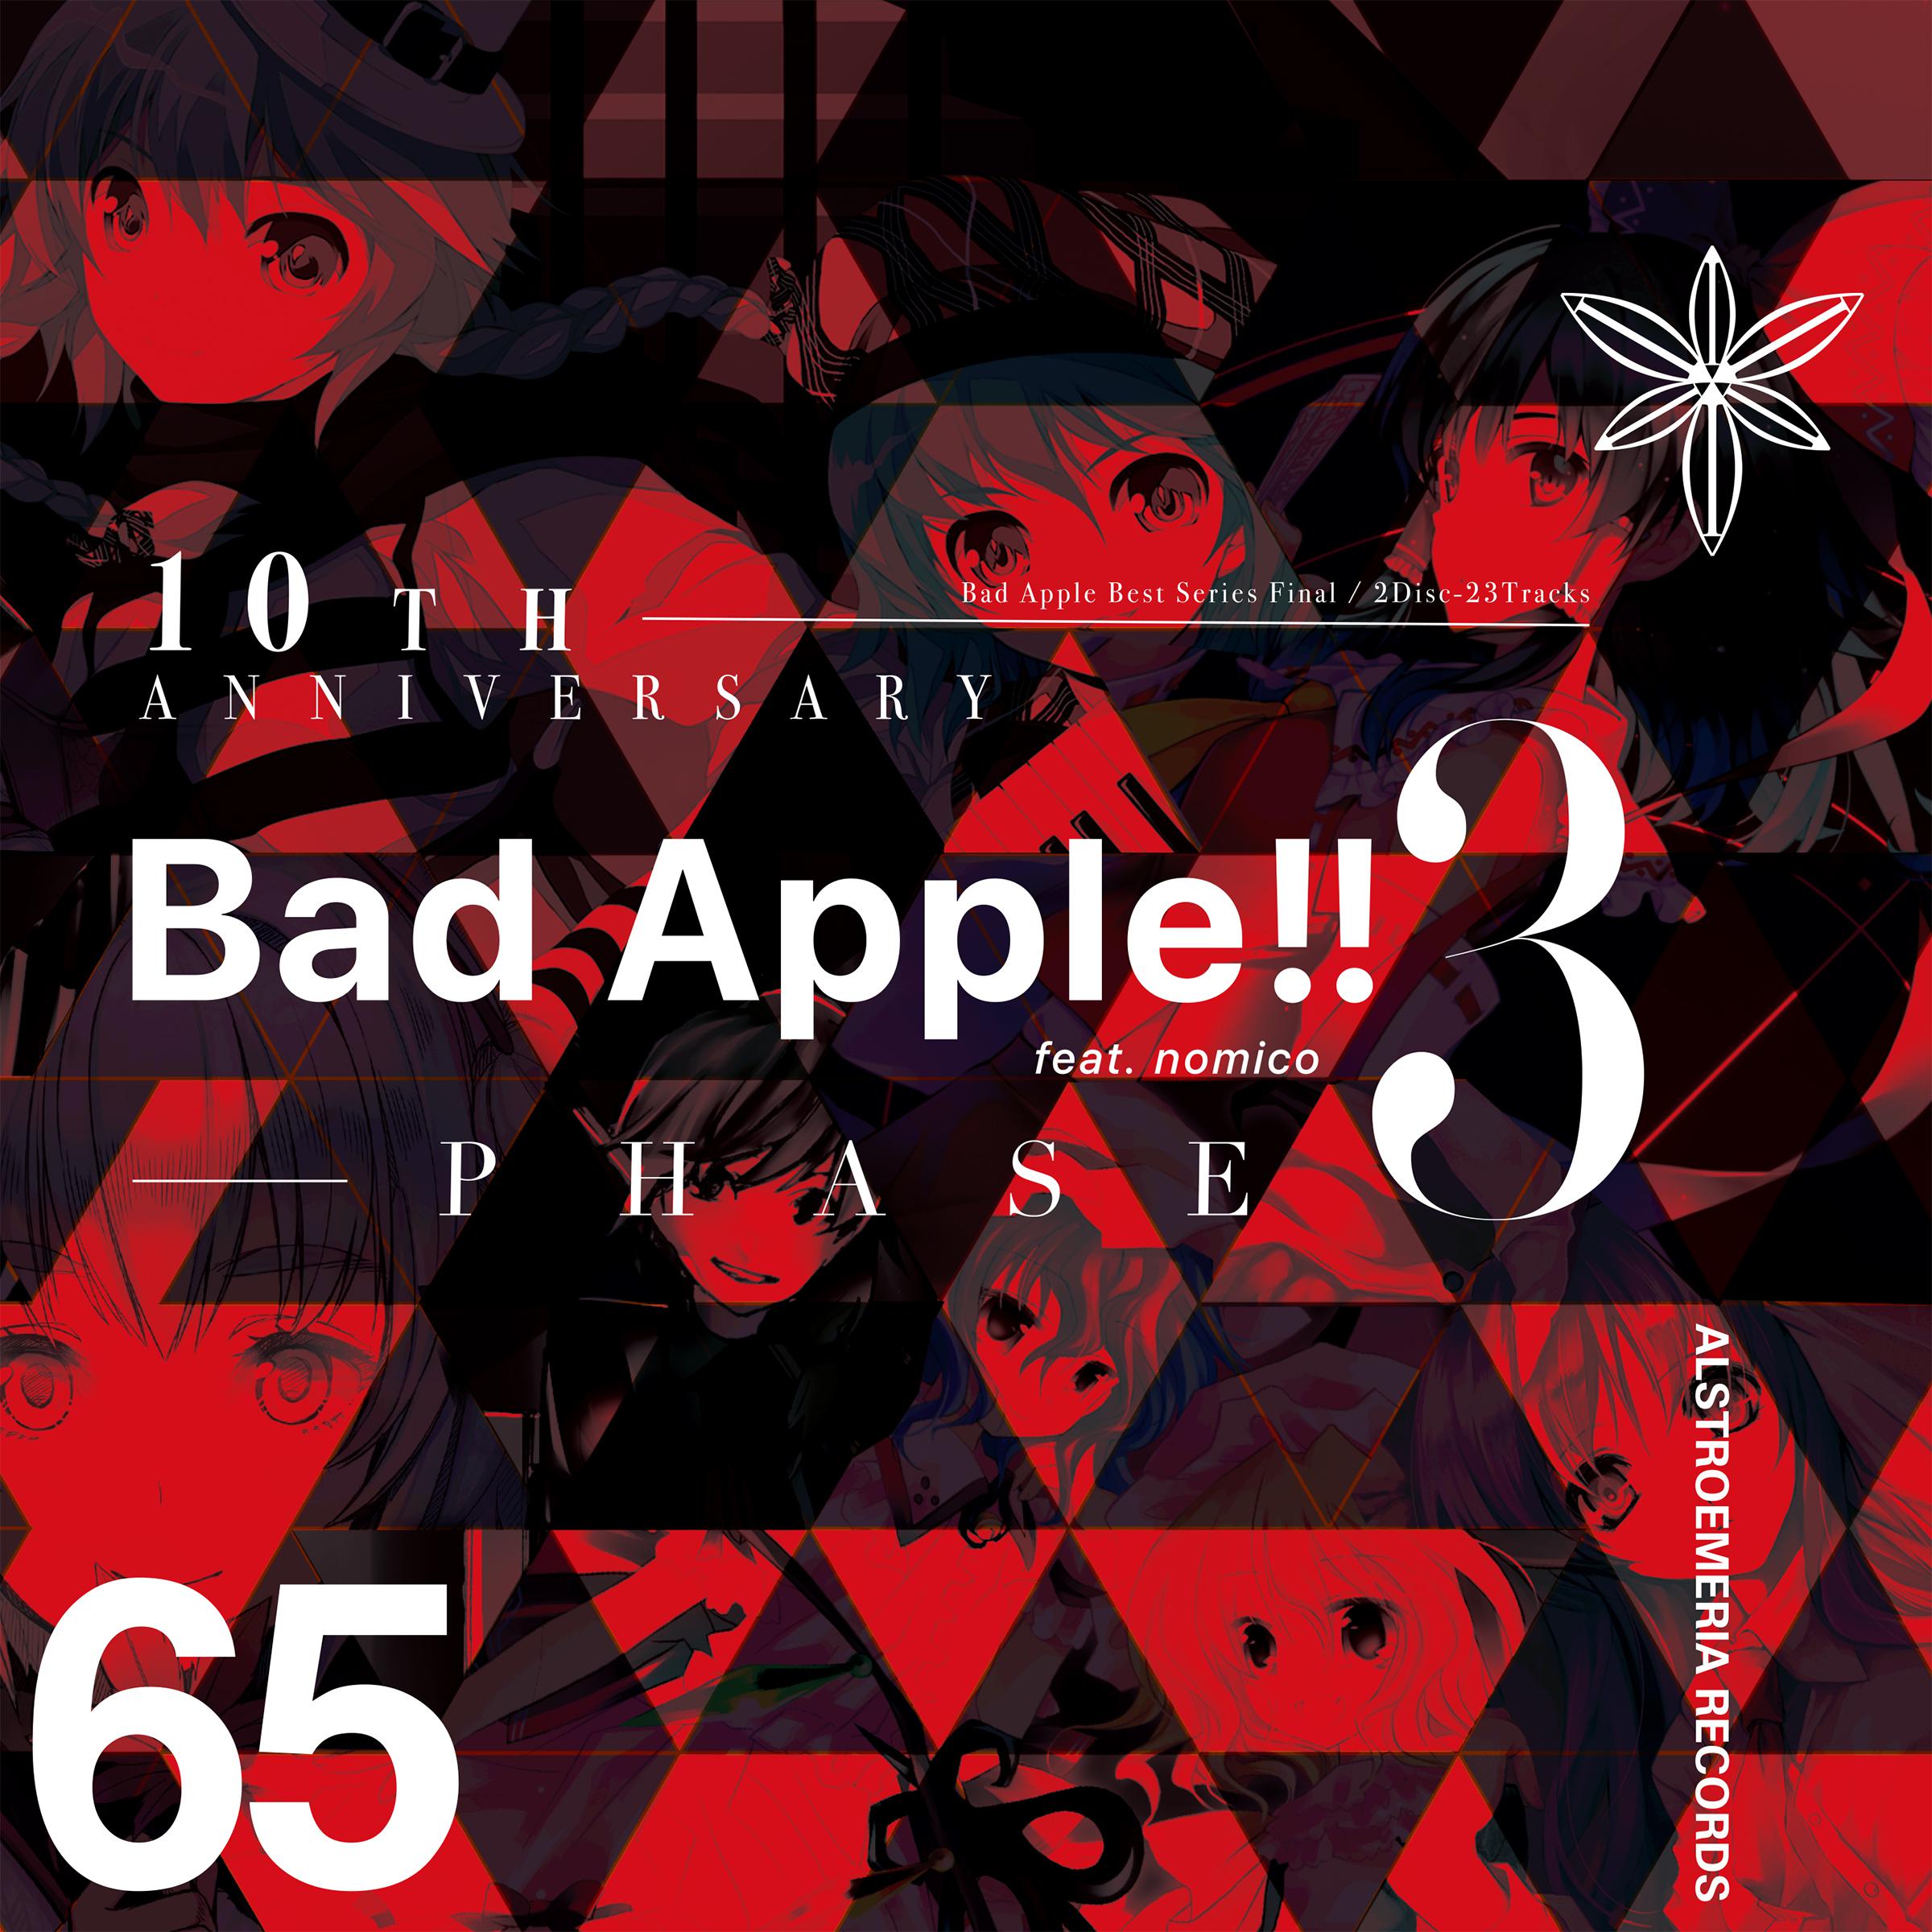 Bad Apple!! feat.nomico (Camellia's "Bad Psy" Remix)